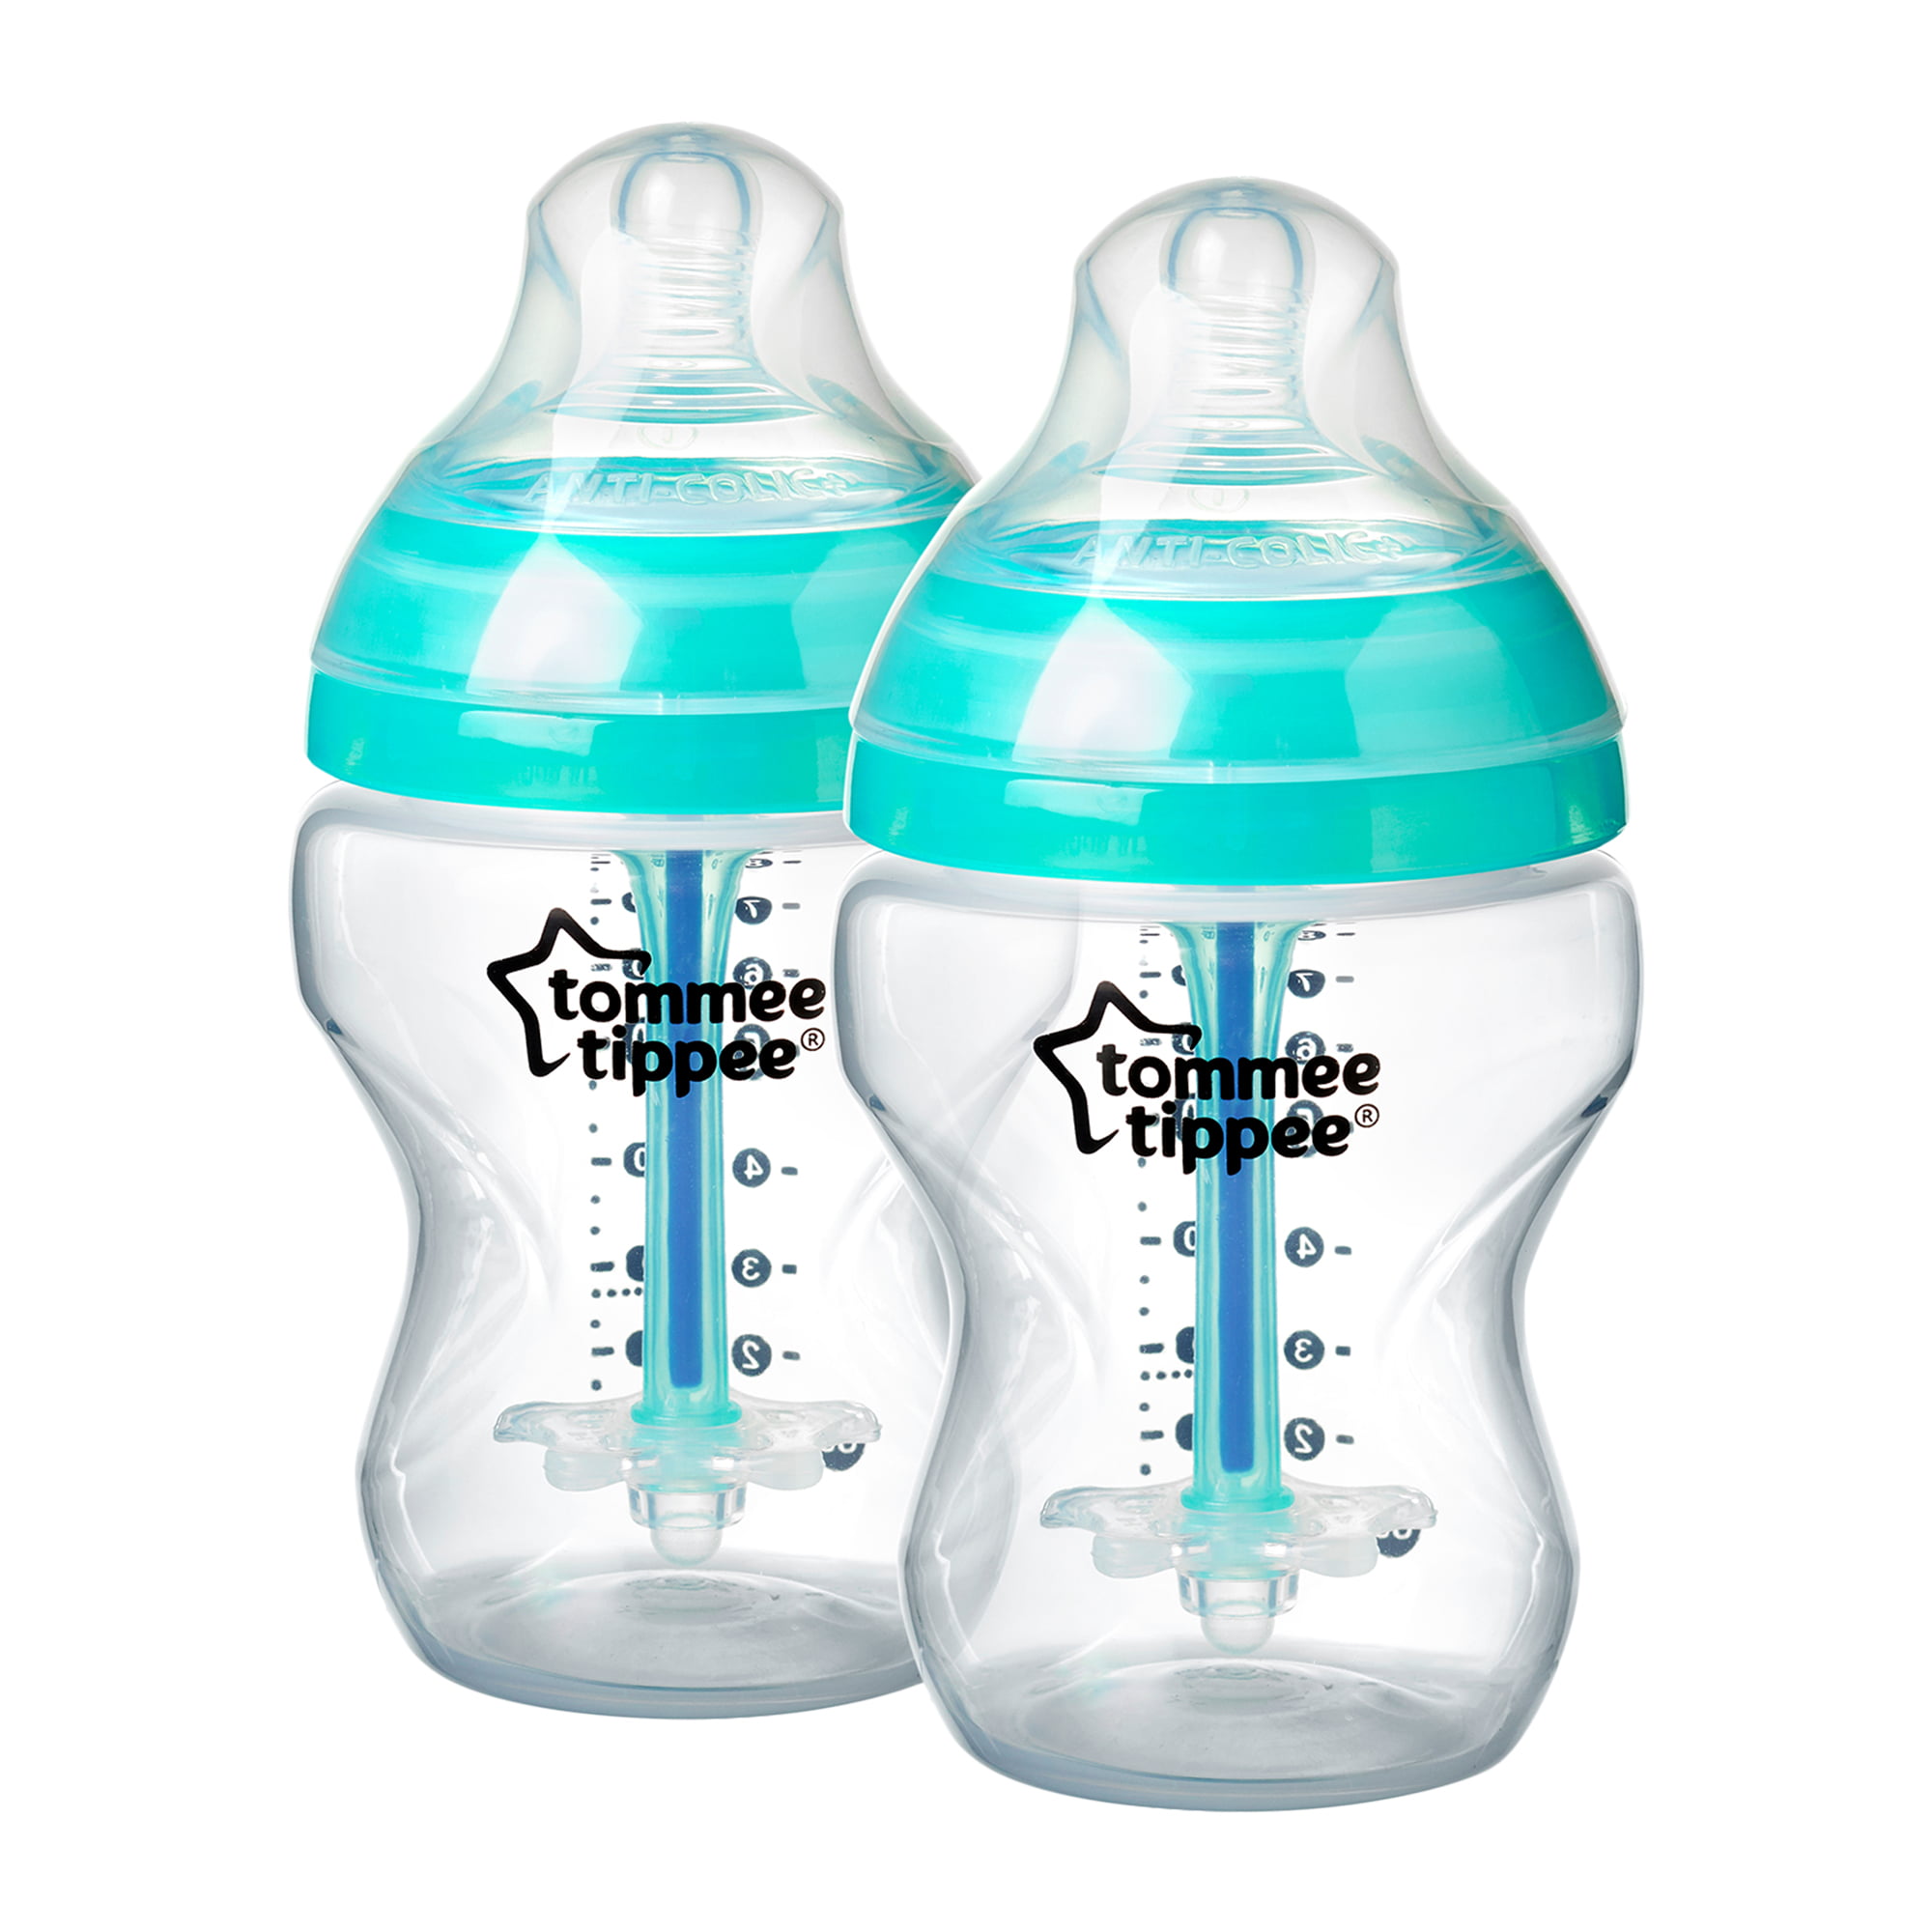 infant bottles walmart